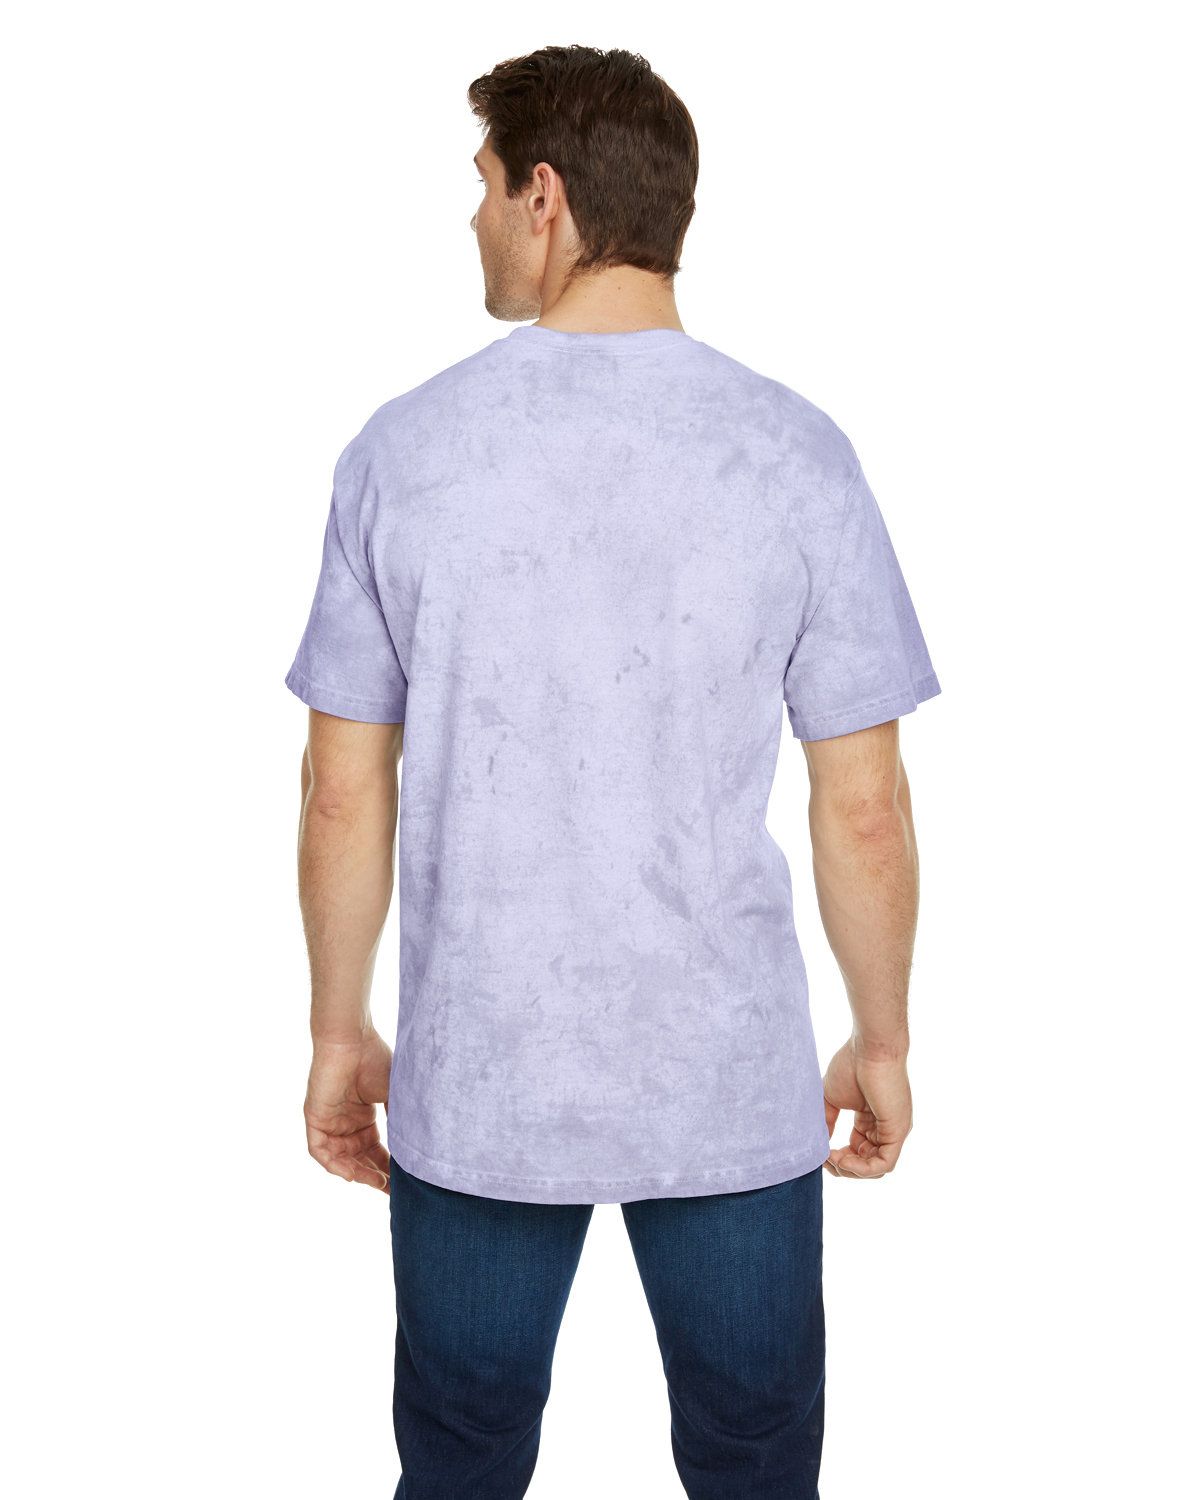 'Comfort Colors 1745 Adult Heavyweight Color Blast T Shirt'